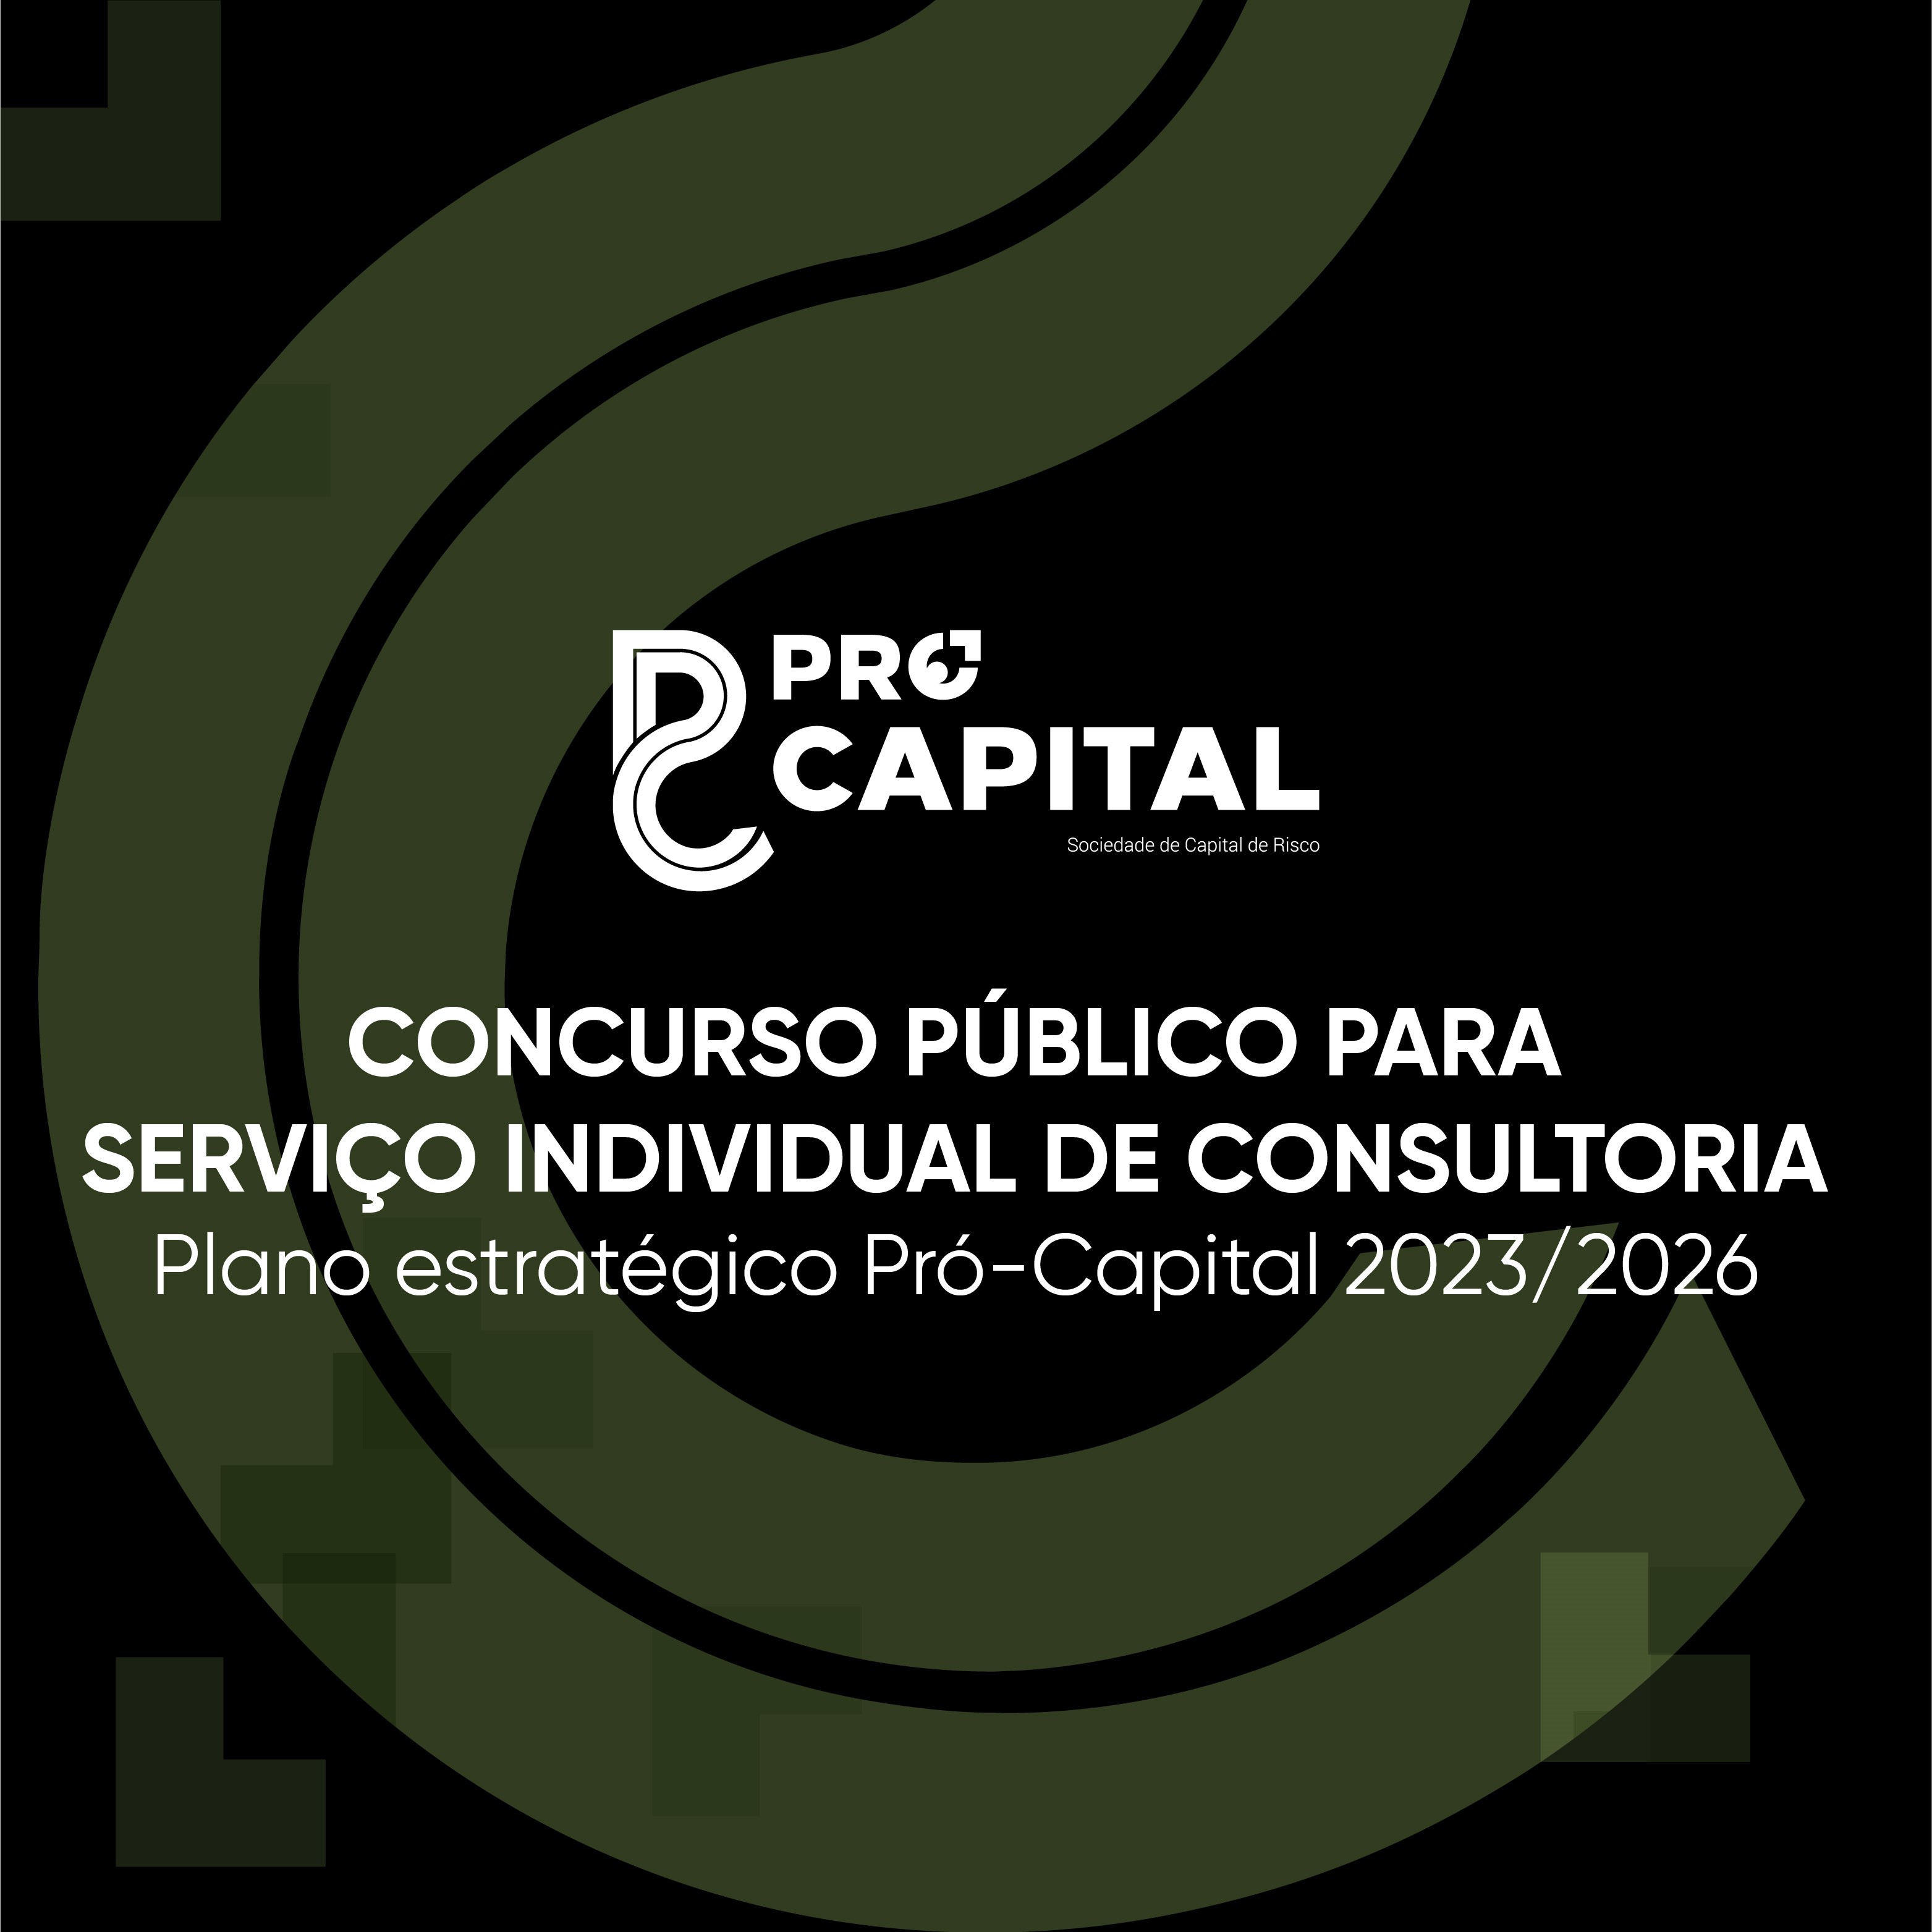 Concurso Público para Serviço Individual de Consultoria (Plano Estratégico Pró-Capital 2023/2026)